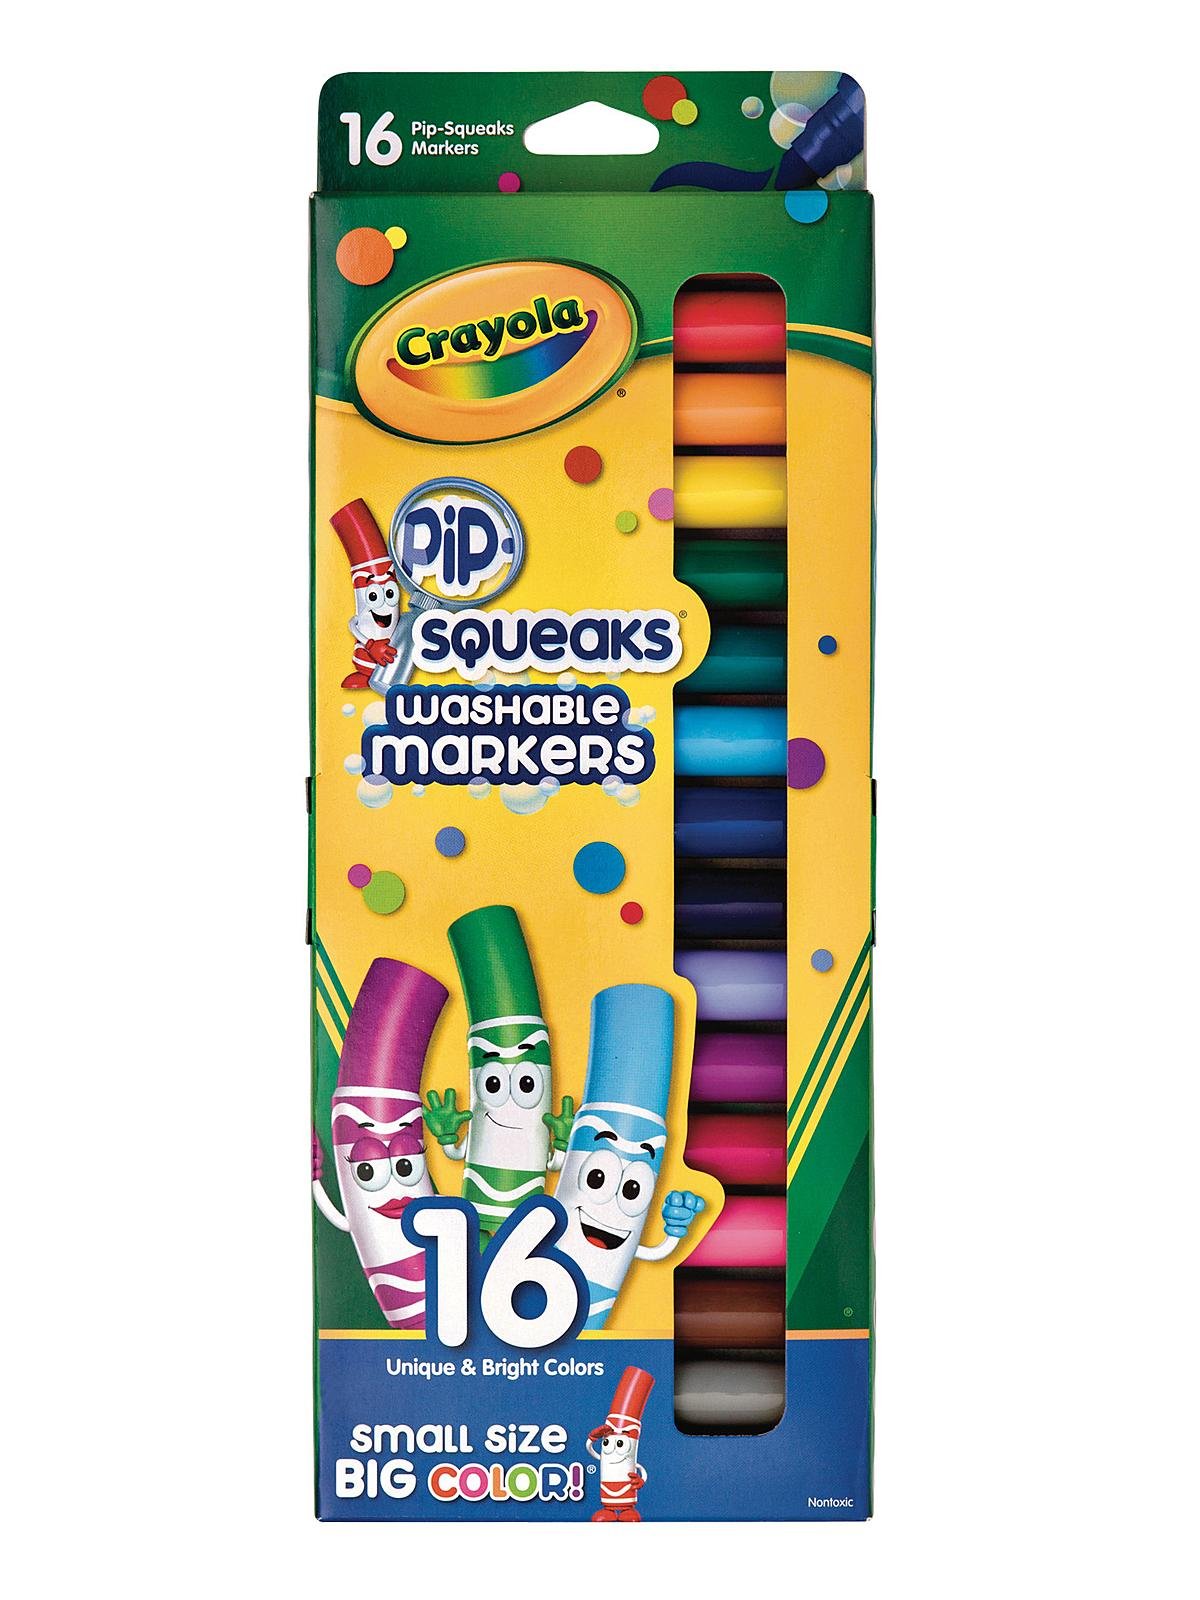 Crayola - Pip-Squeaks Markers